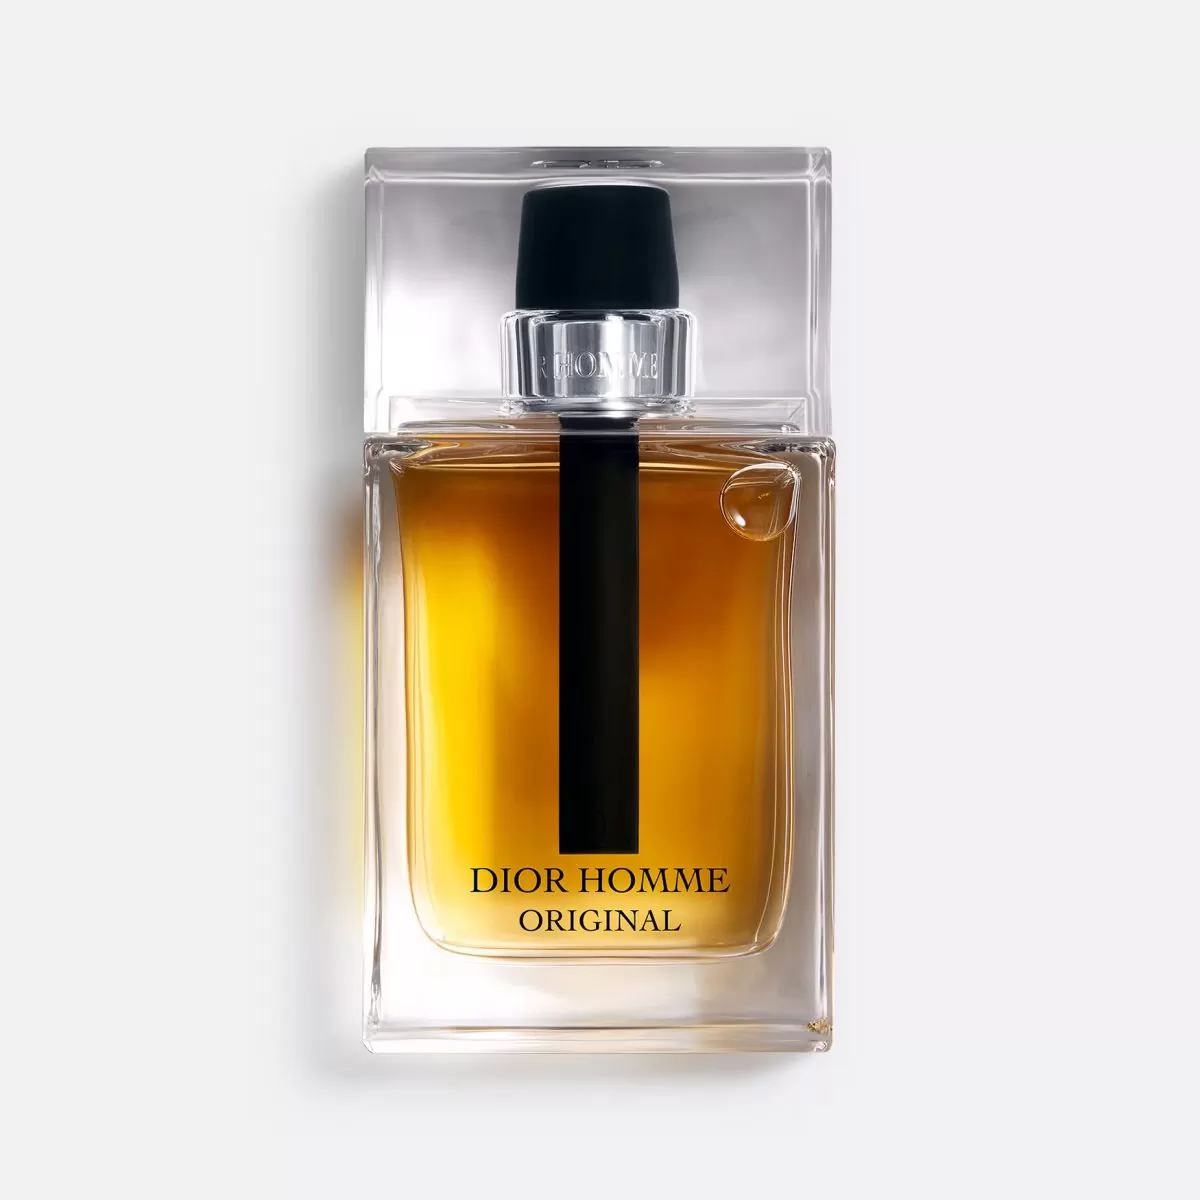 dior homme parfum| أفضل عطر للرجال من ديور